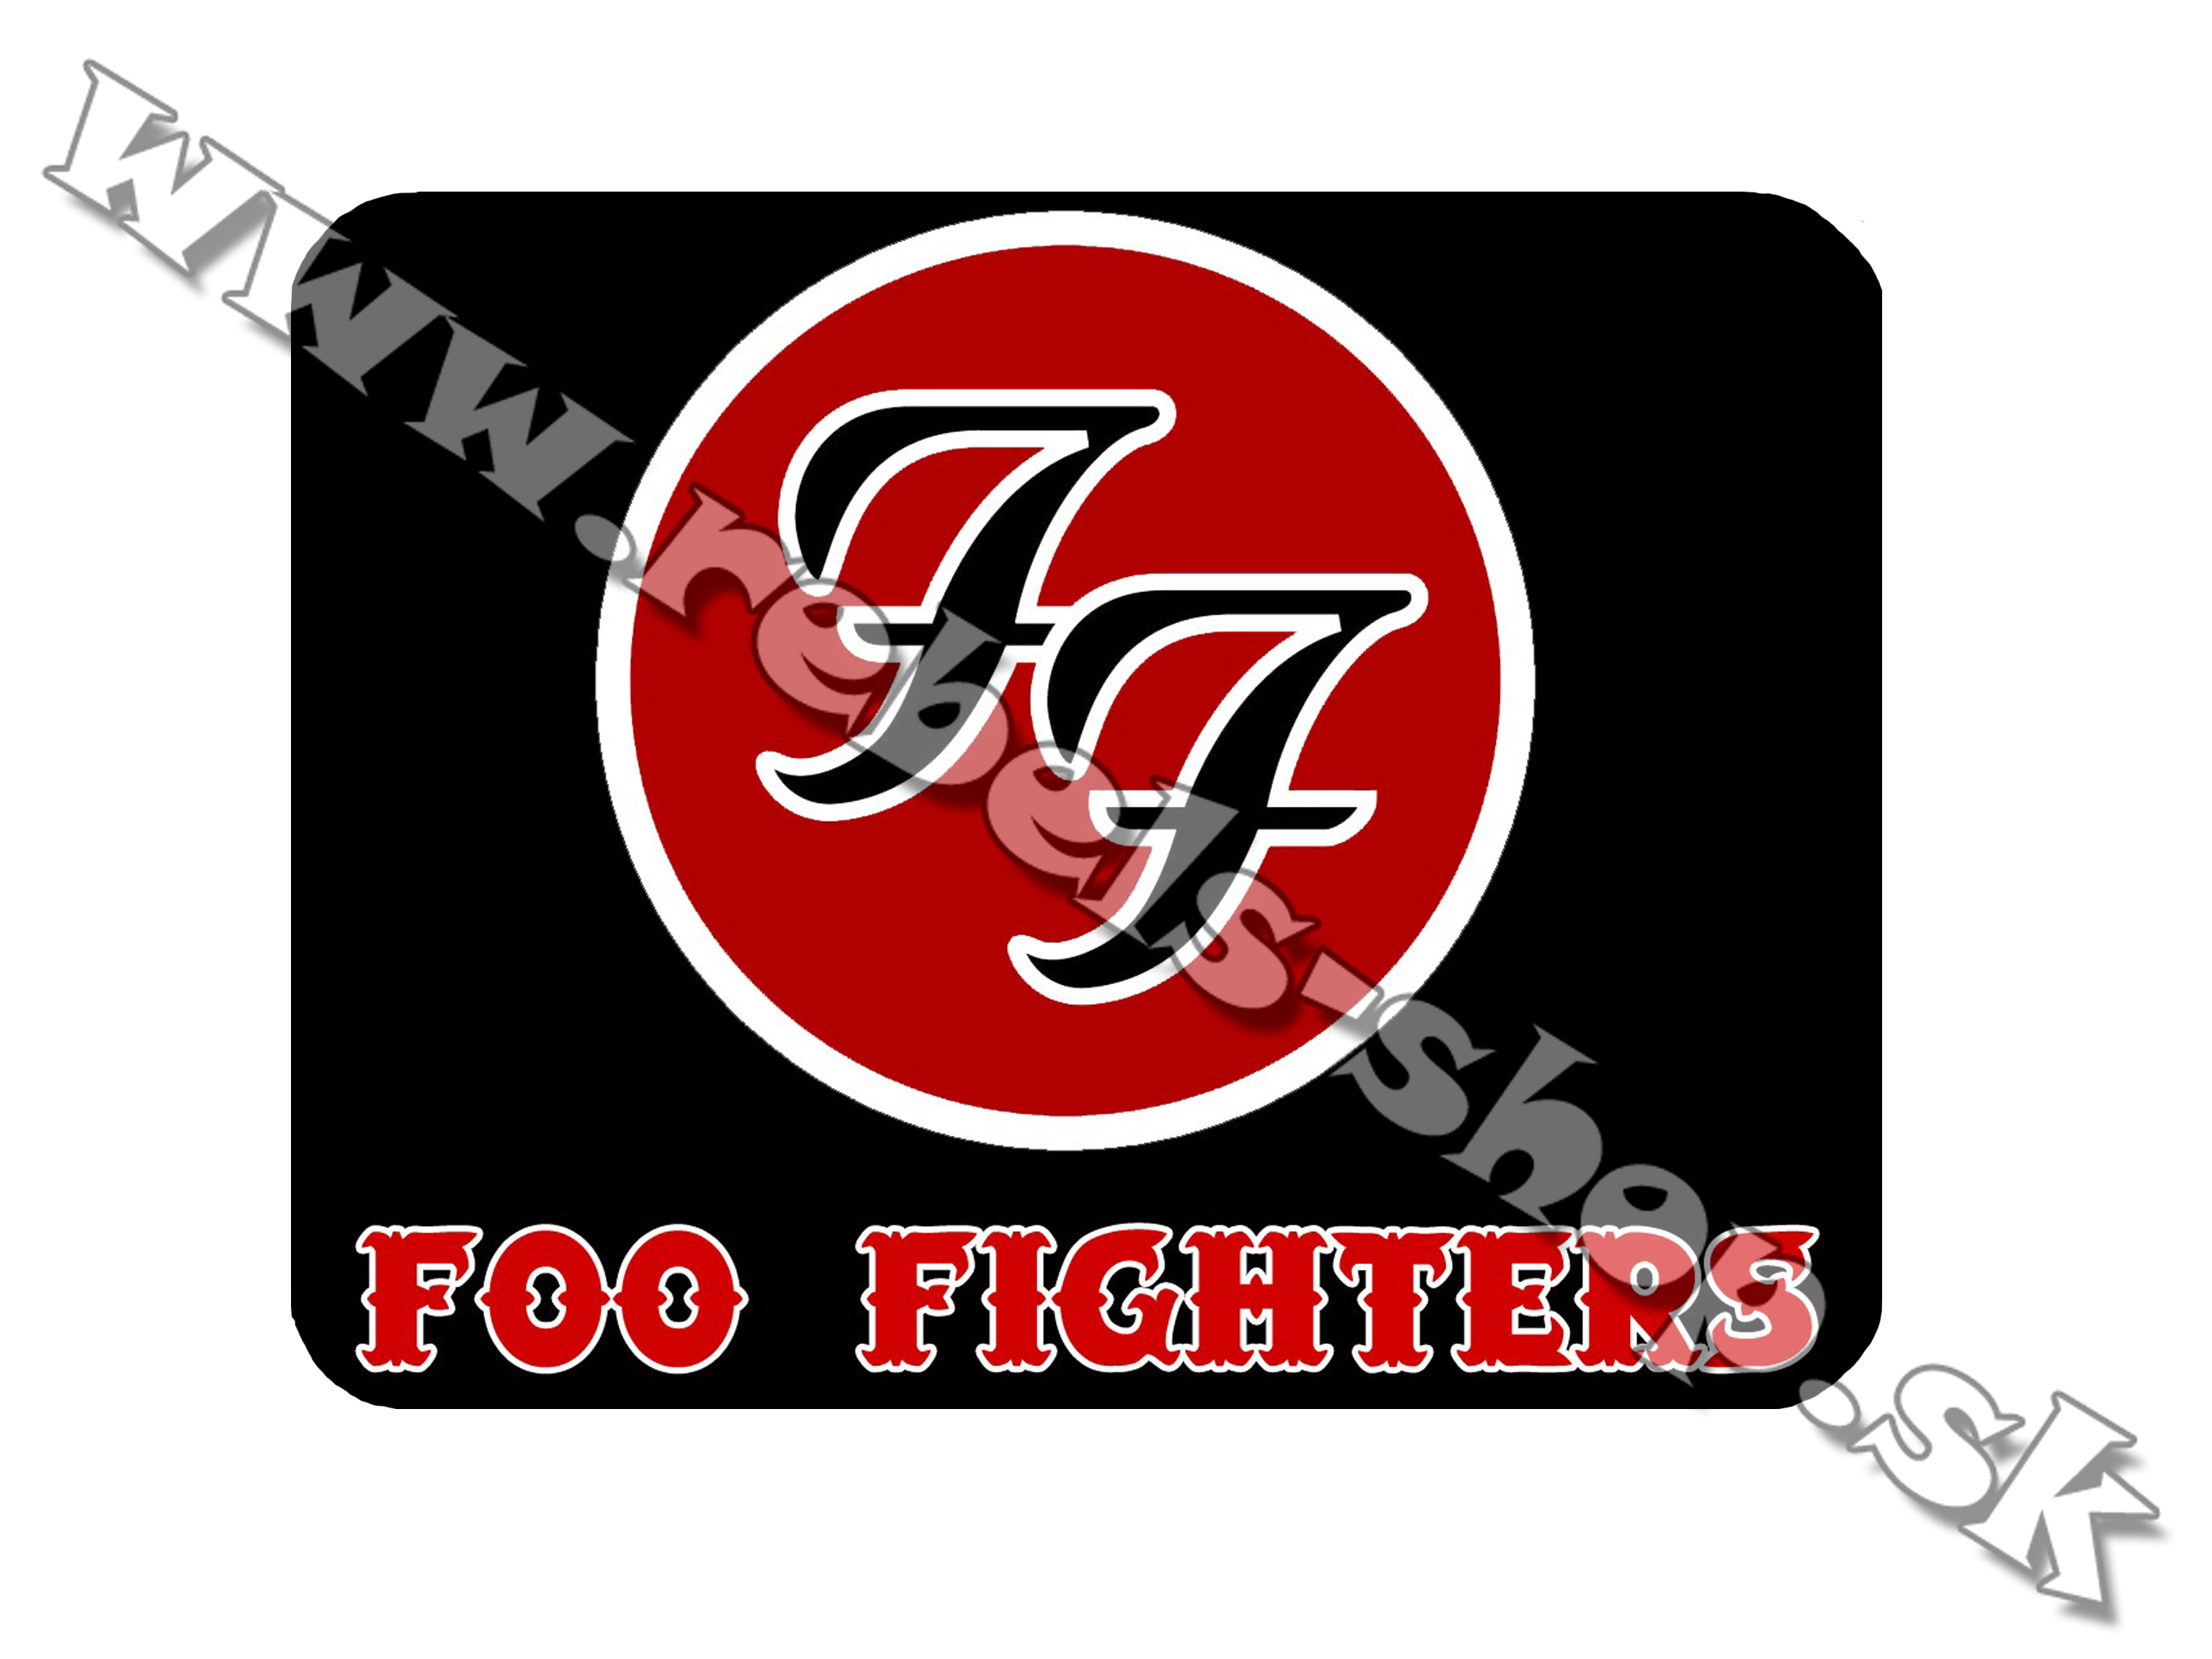 Podložka pod myš  "Foo Fighters"